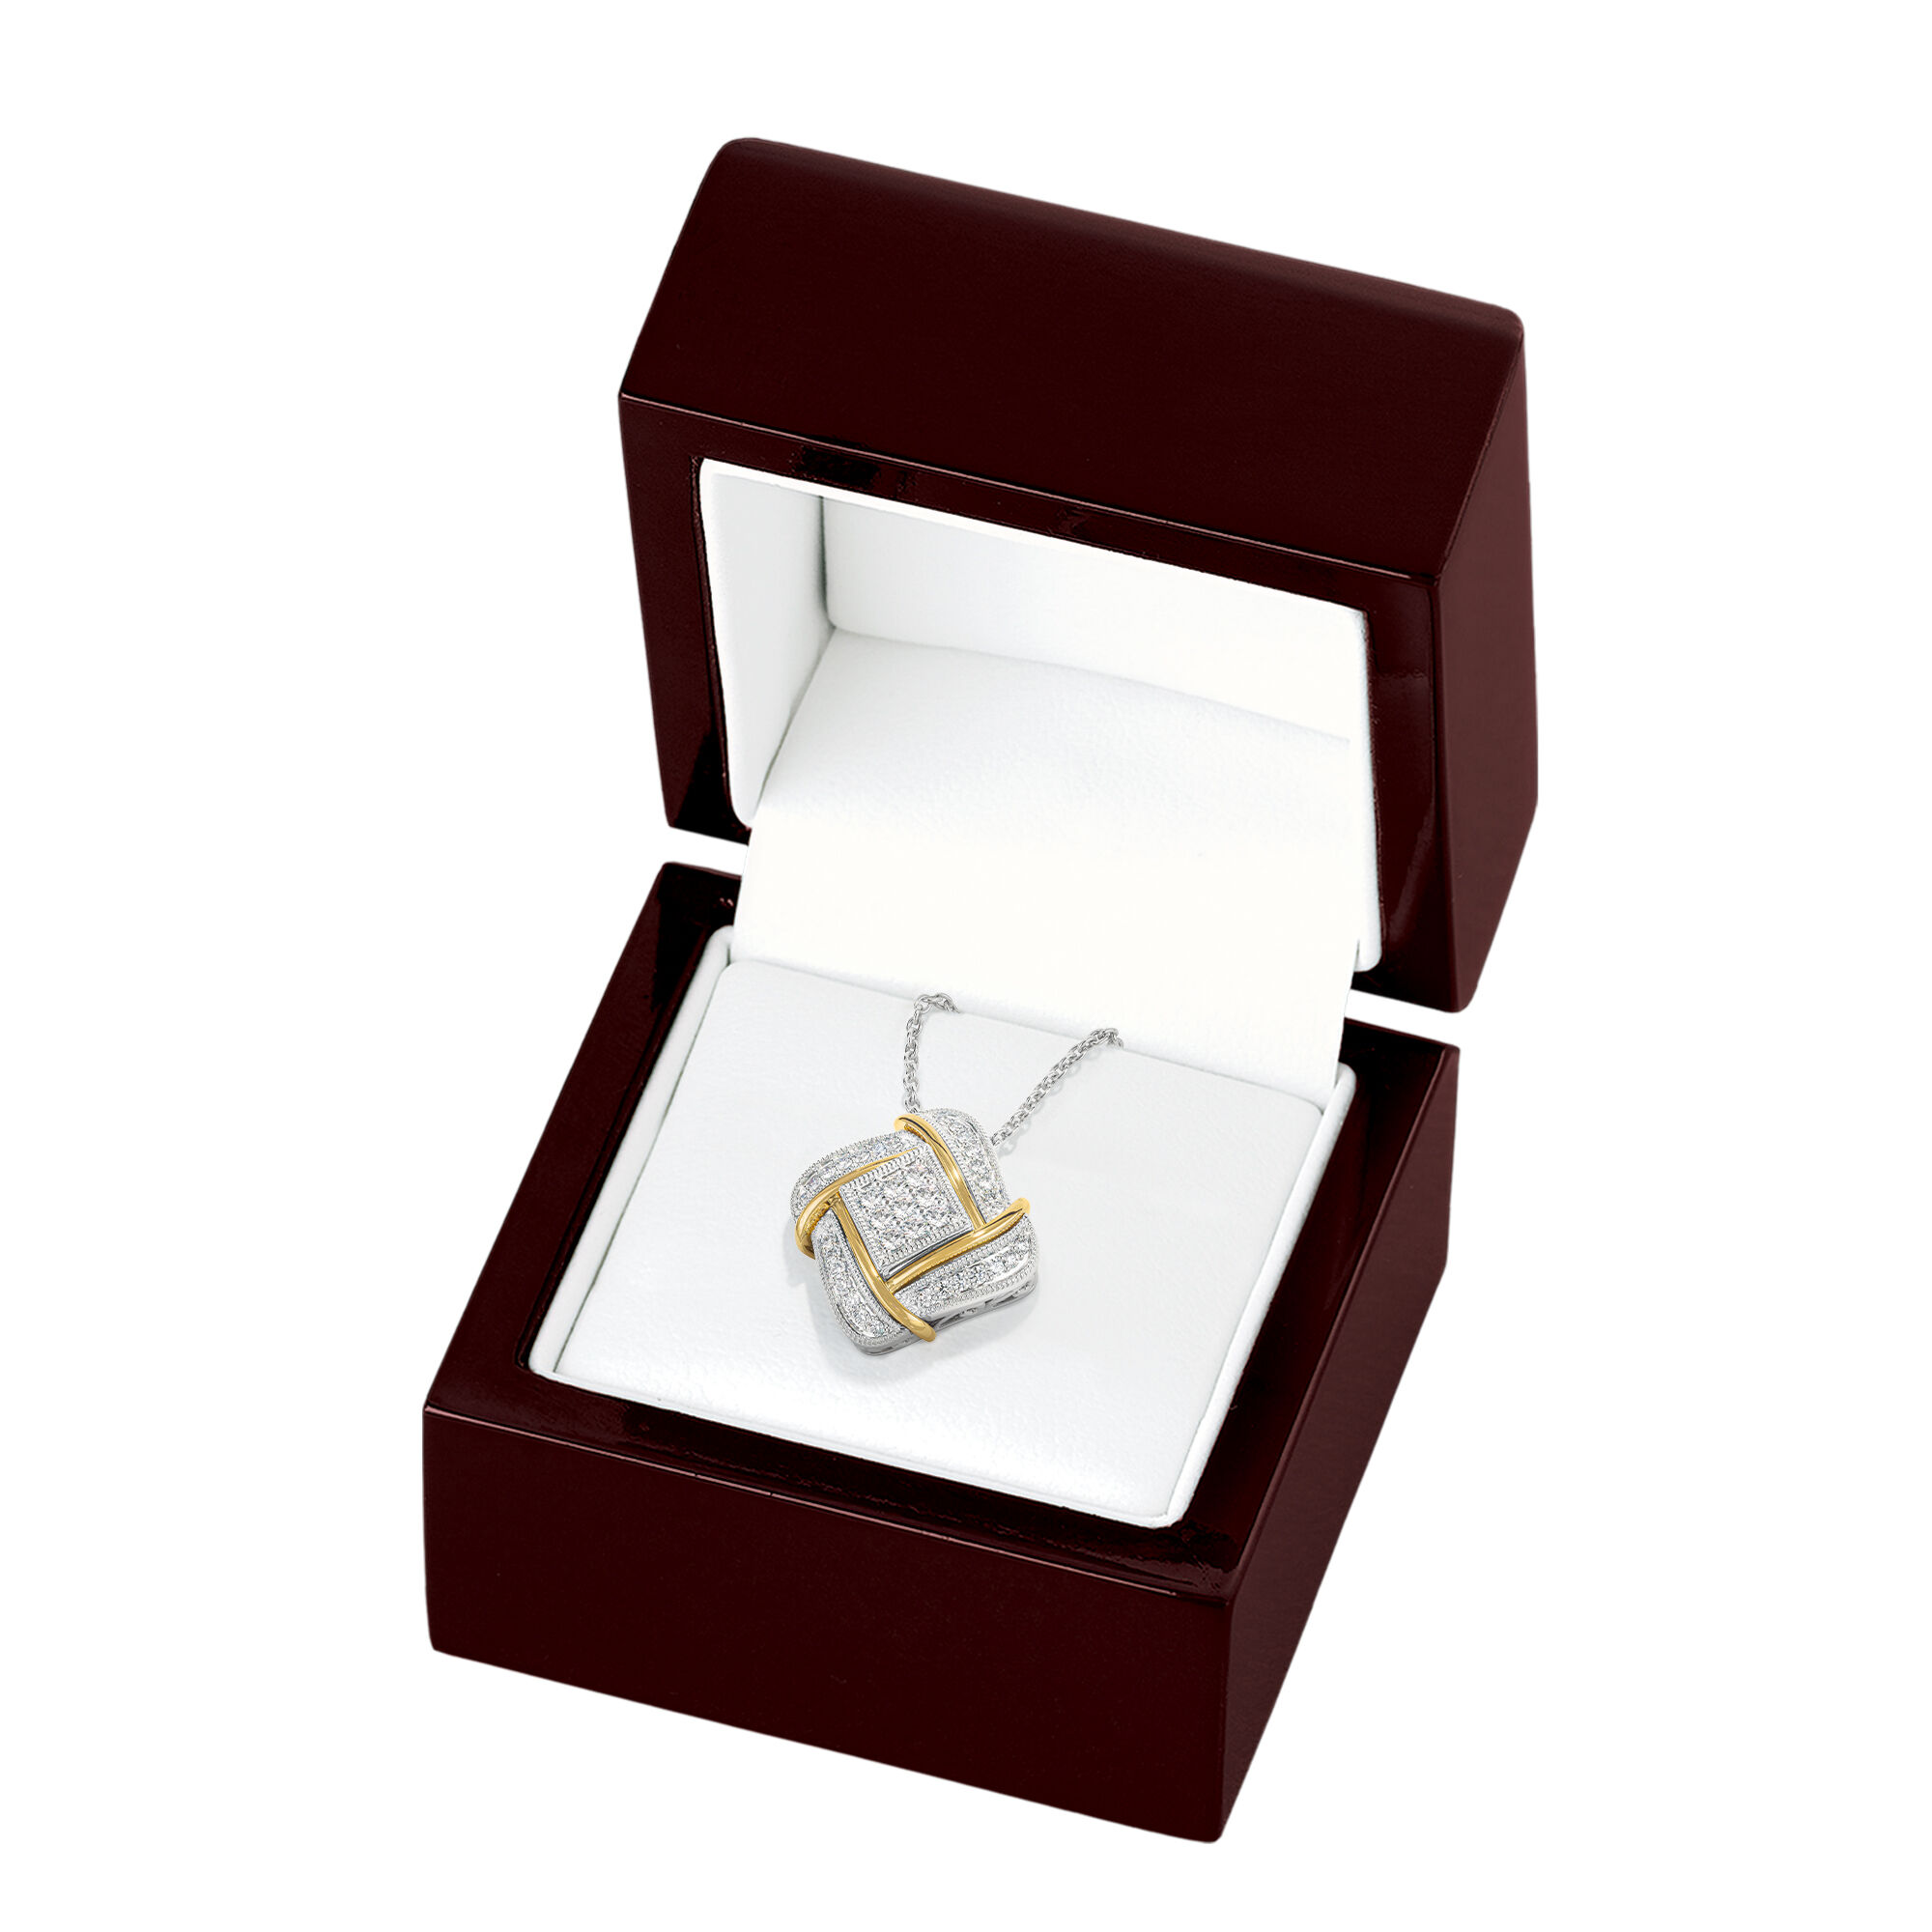 Majesty Diamond 4kt Gold Pendant 10517 0013 g gift box